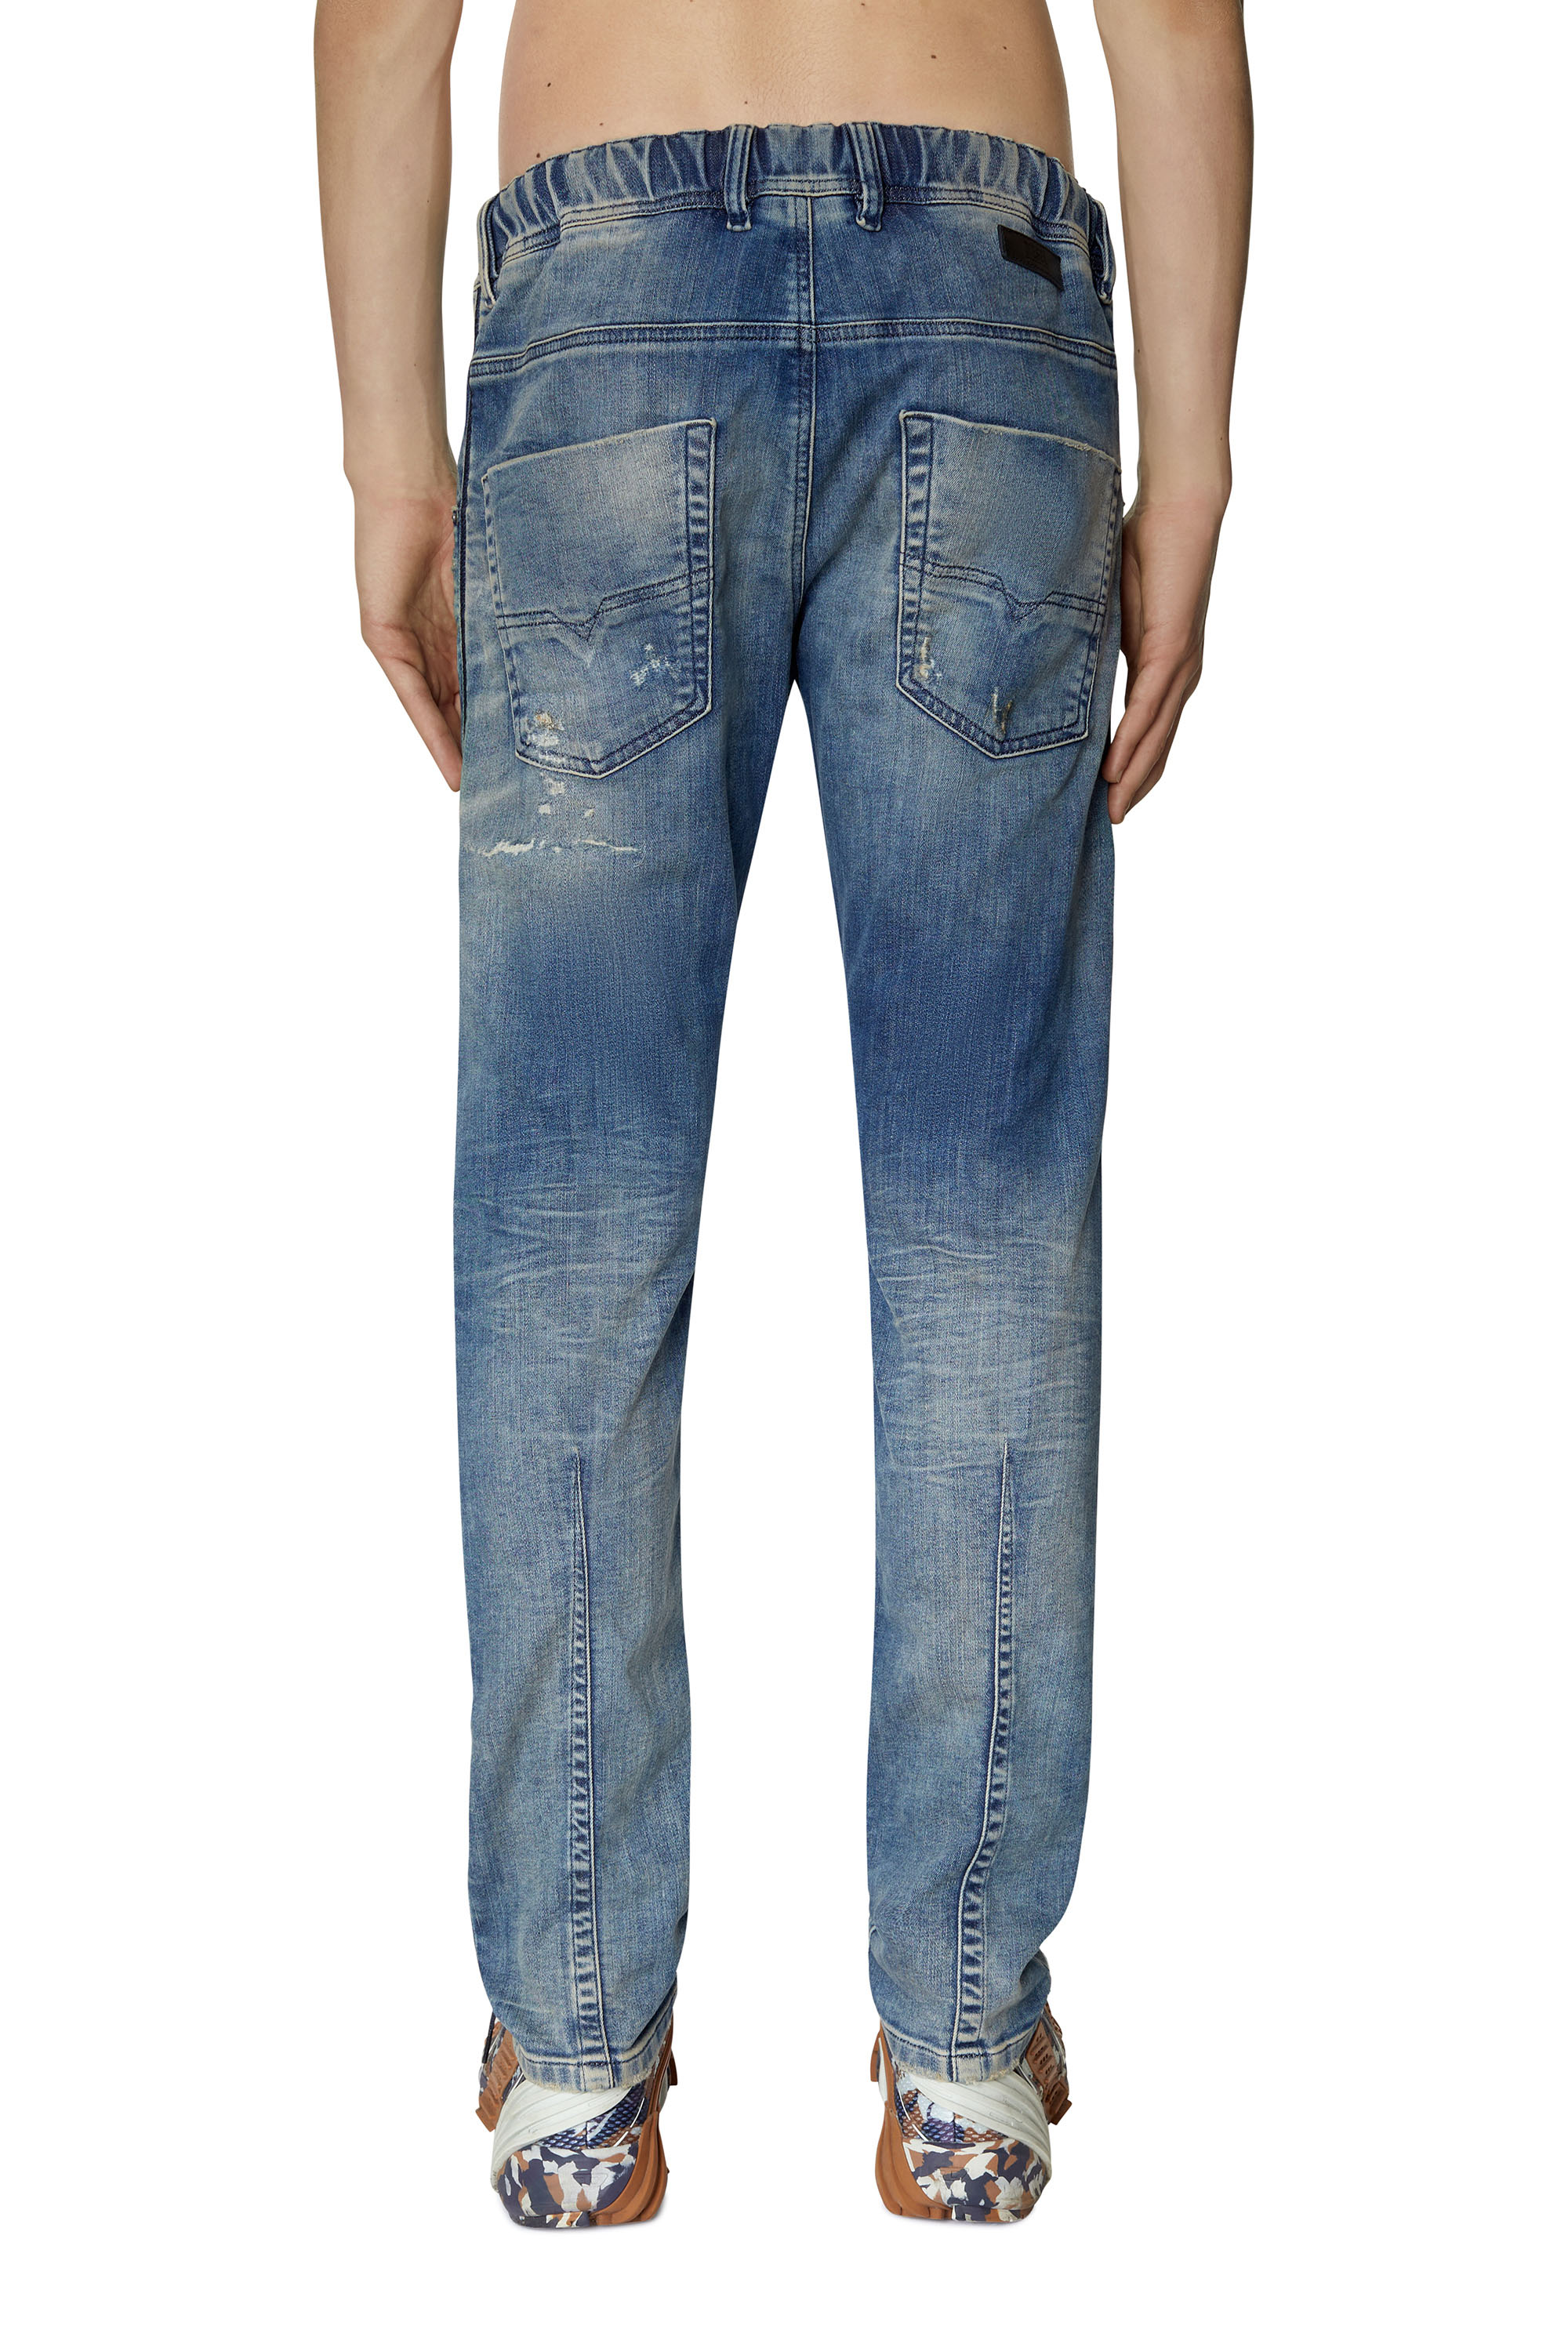 Krooley JoggJeans® 09E09 Man: Tapered Medium blue Jeans | Diesel